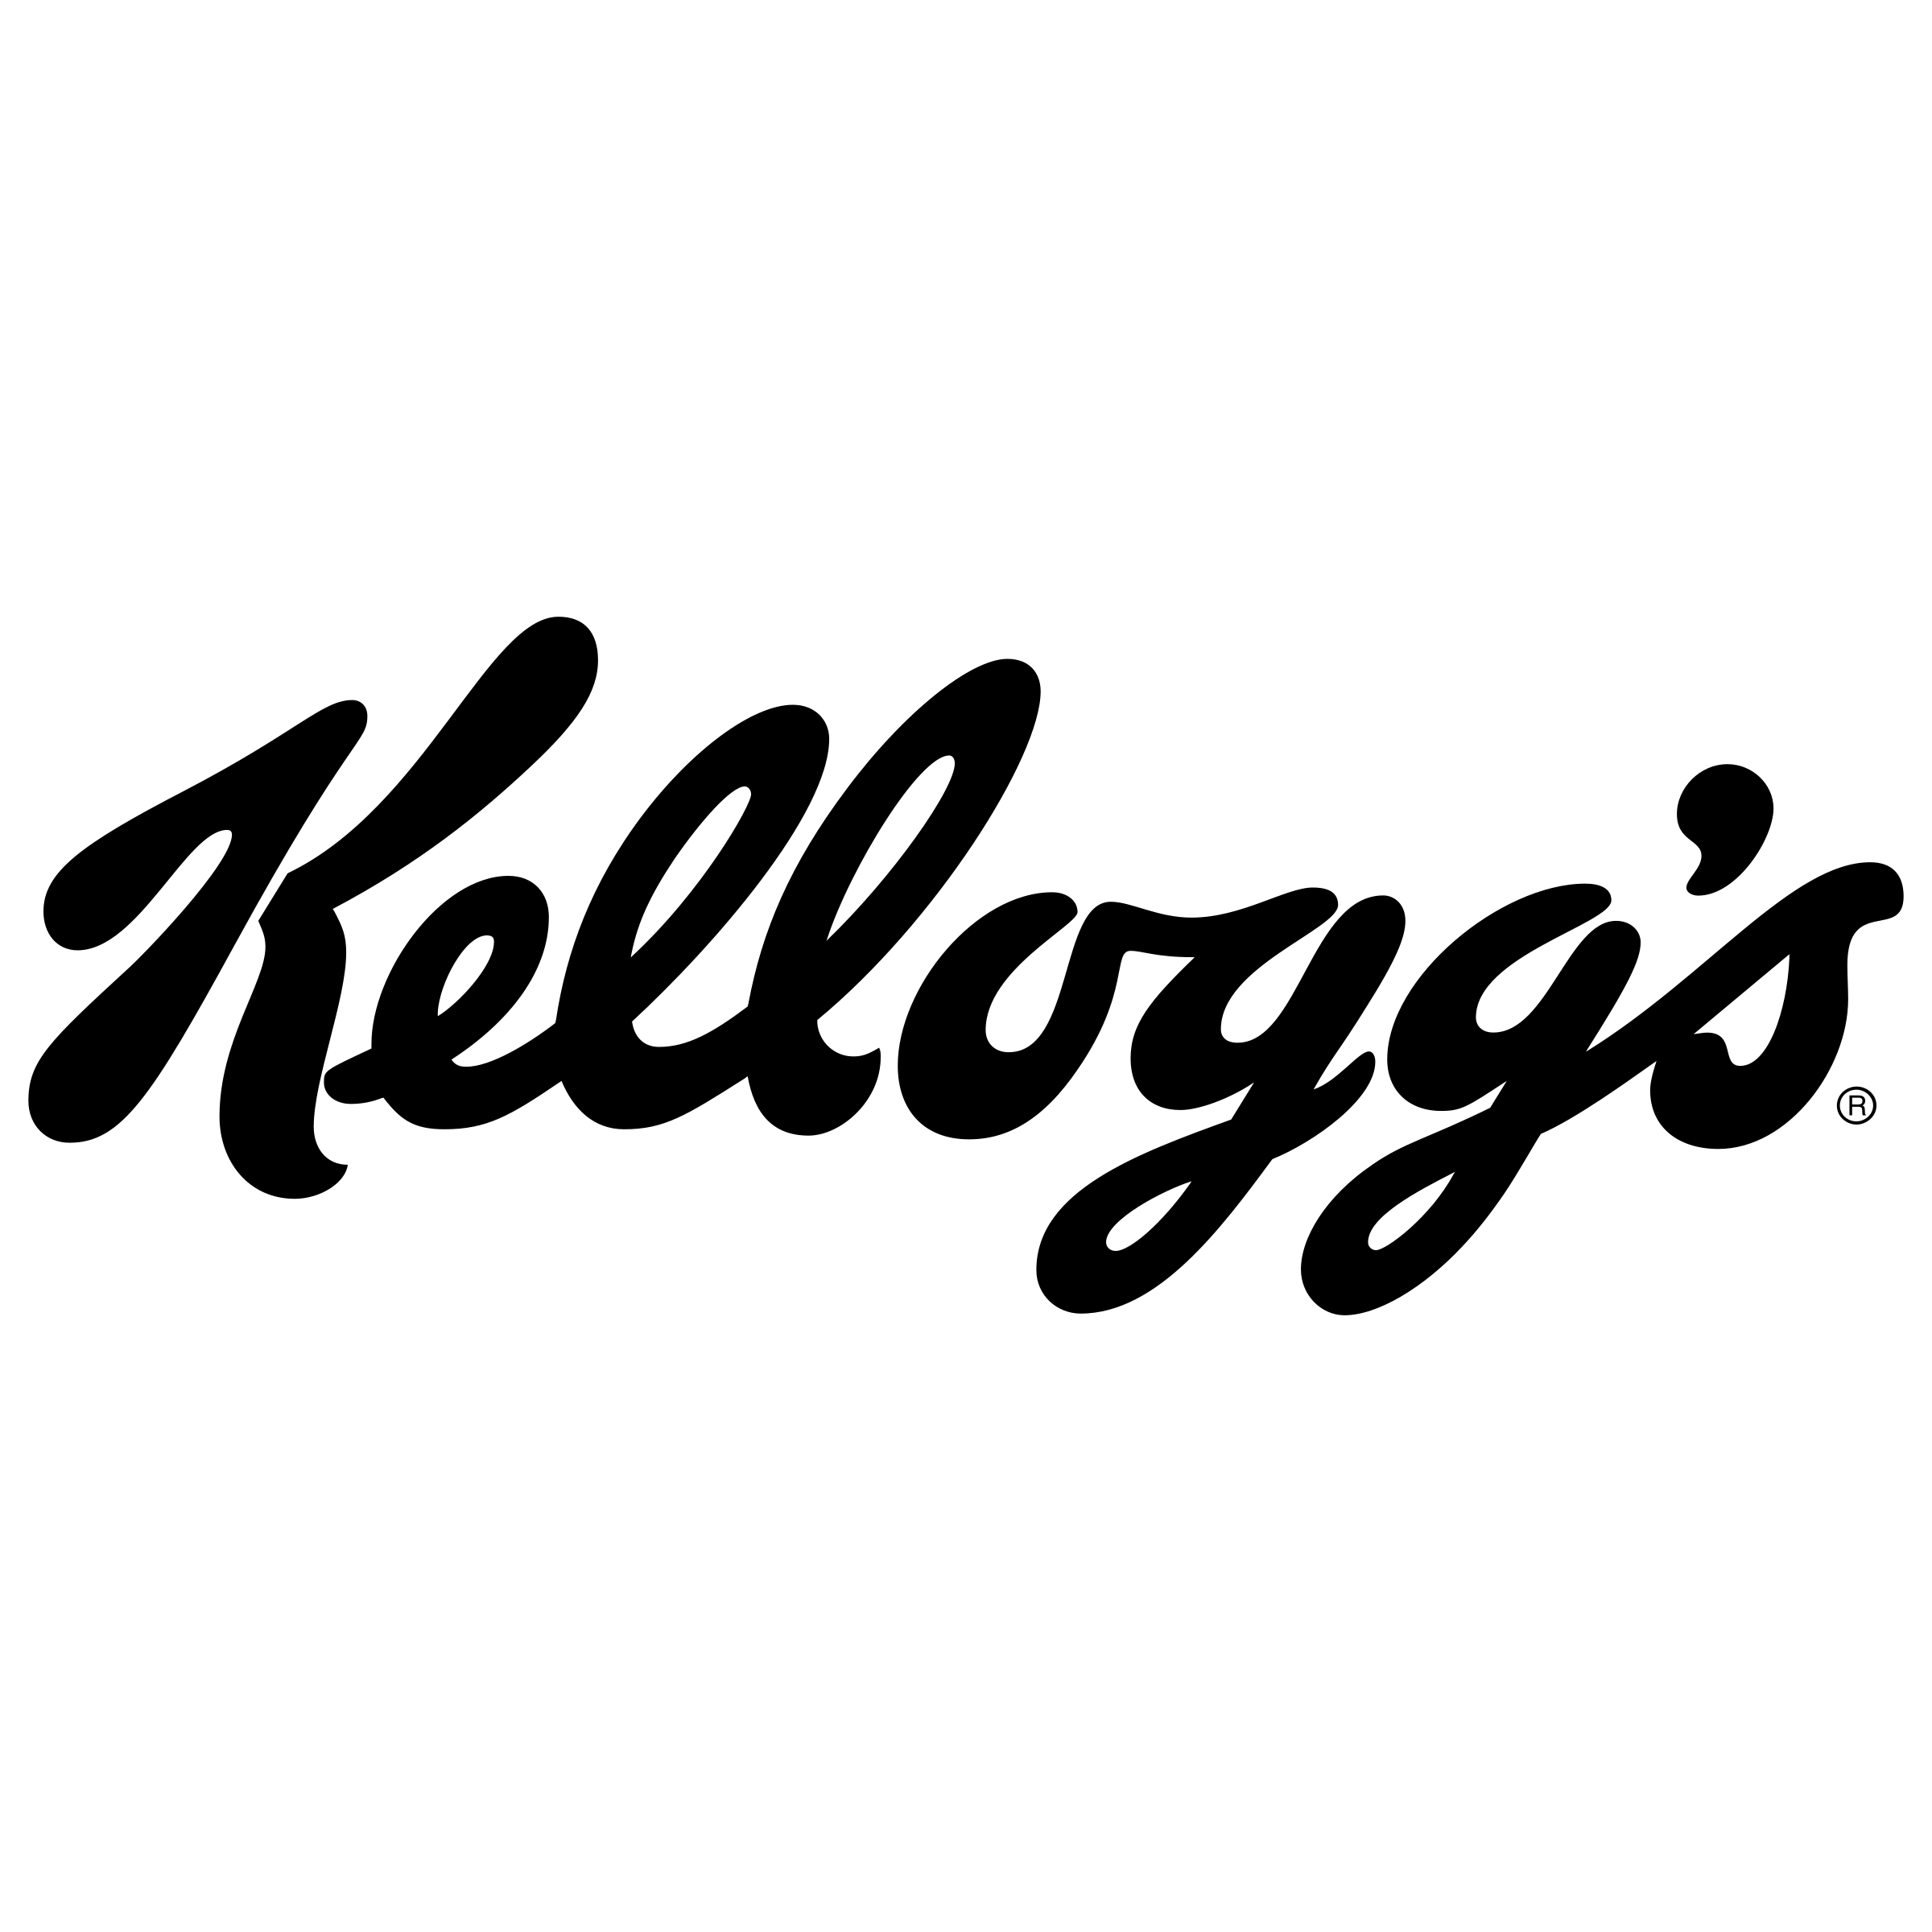 kelloggs-1-logo-png-transparent.png